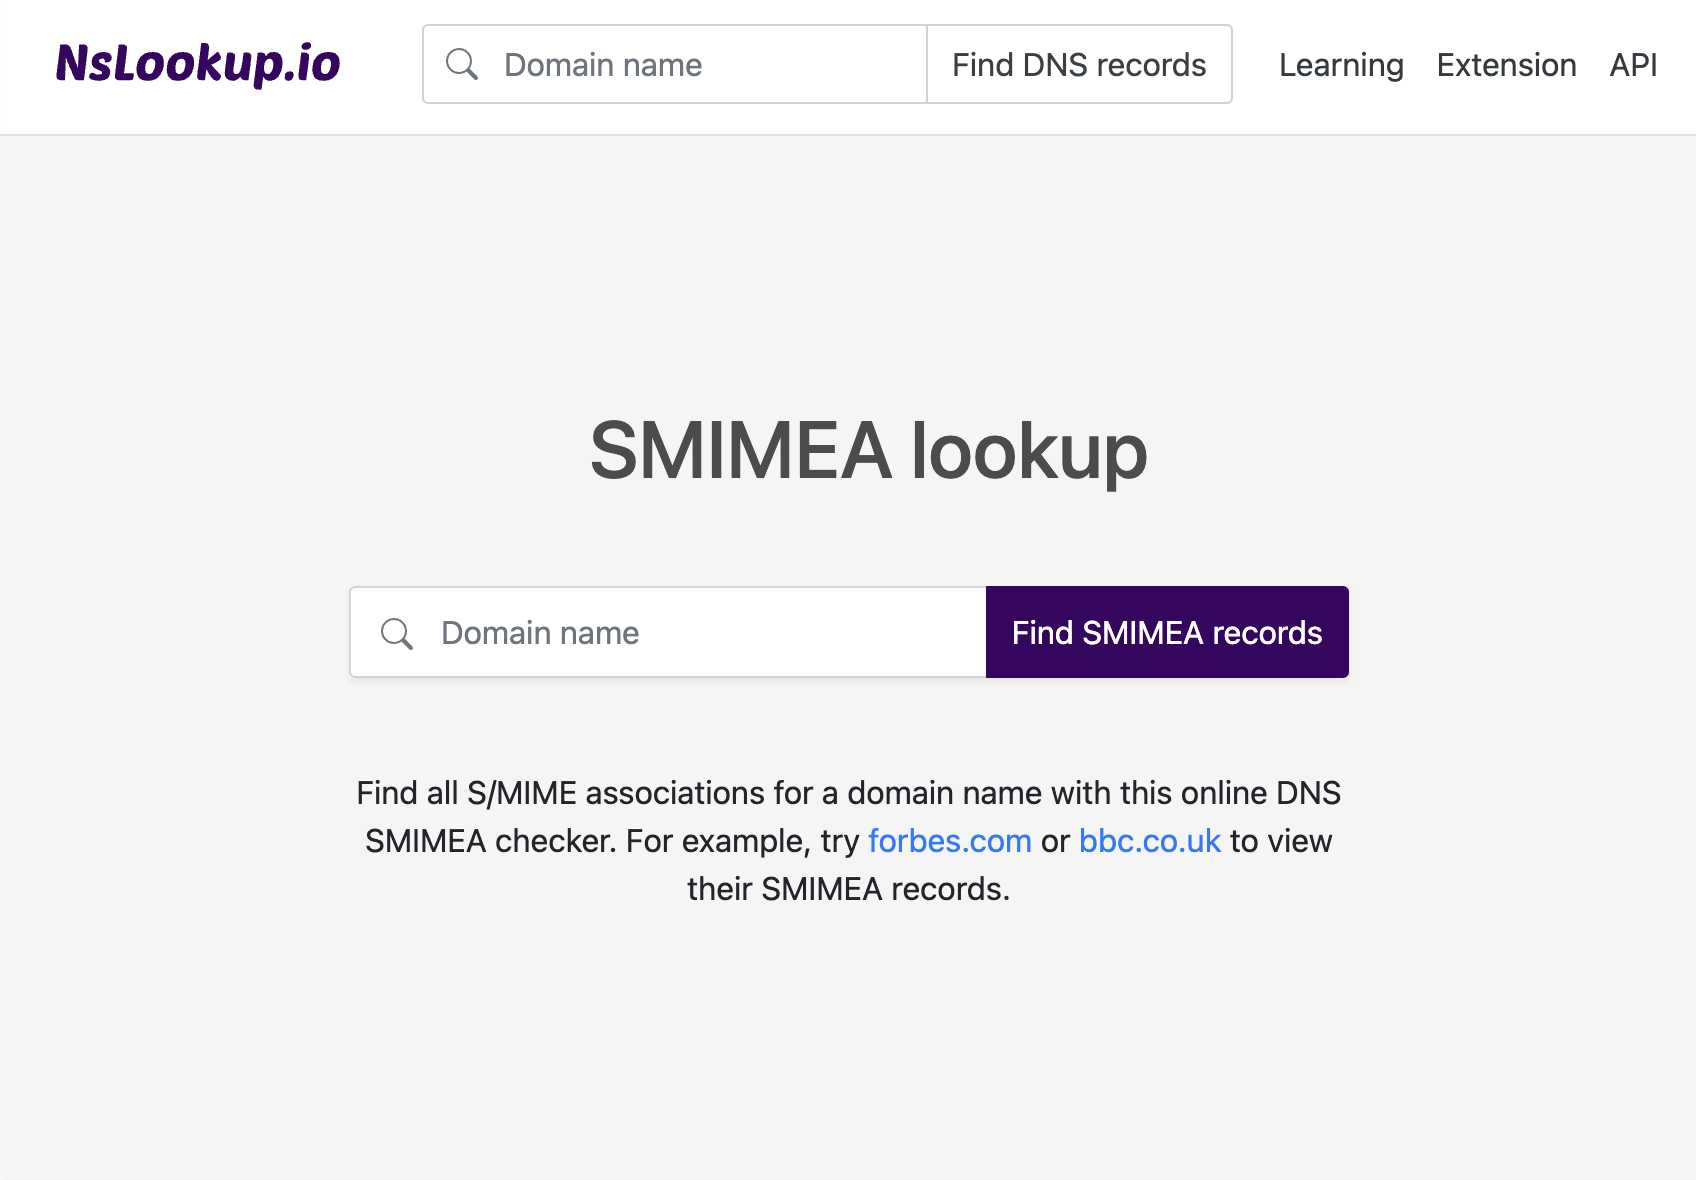 Open the SMIMEA lookup tool